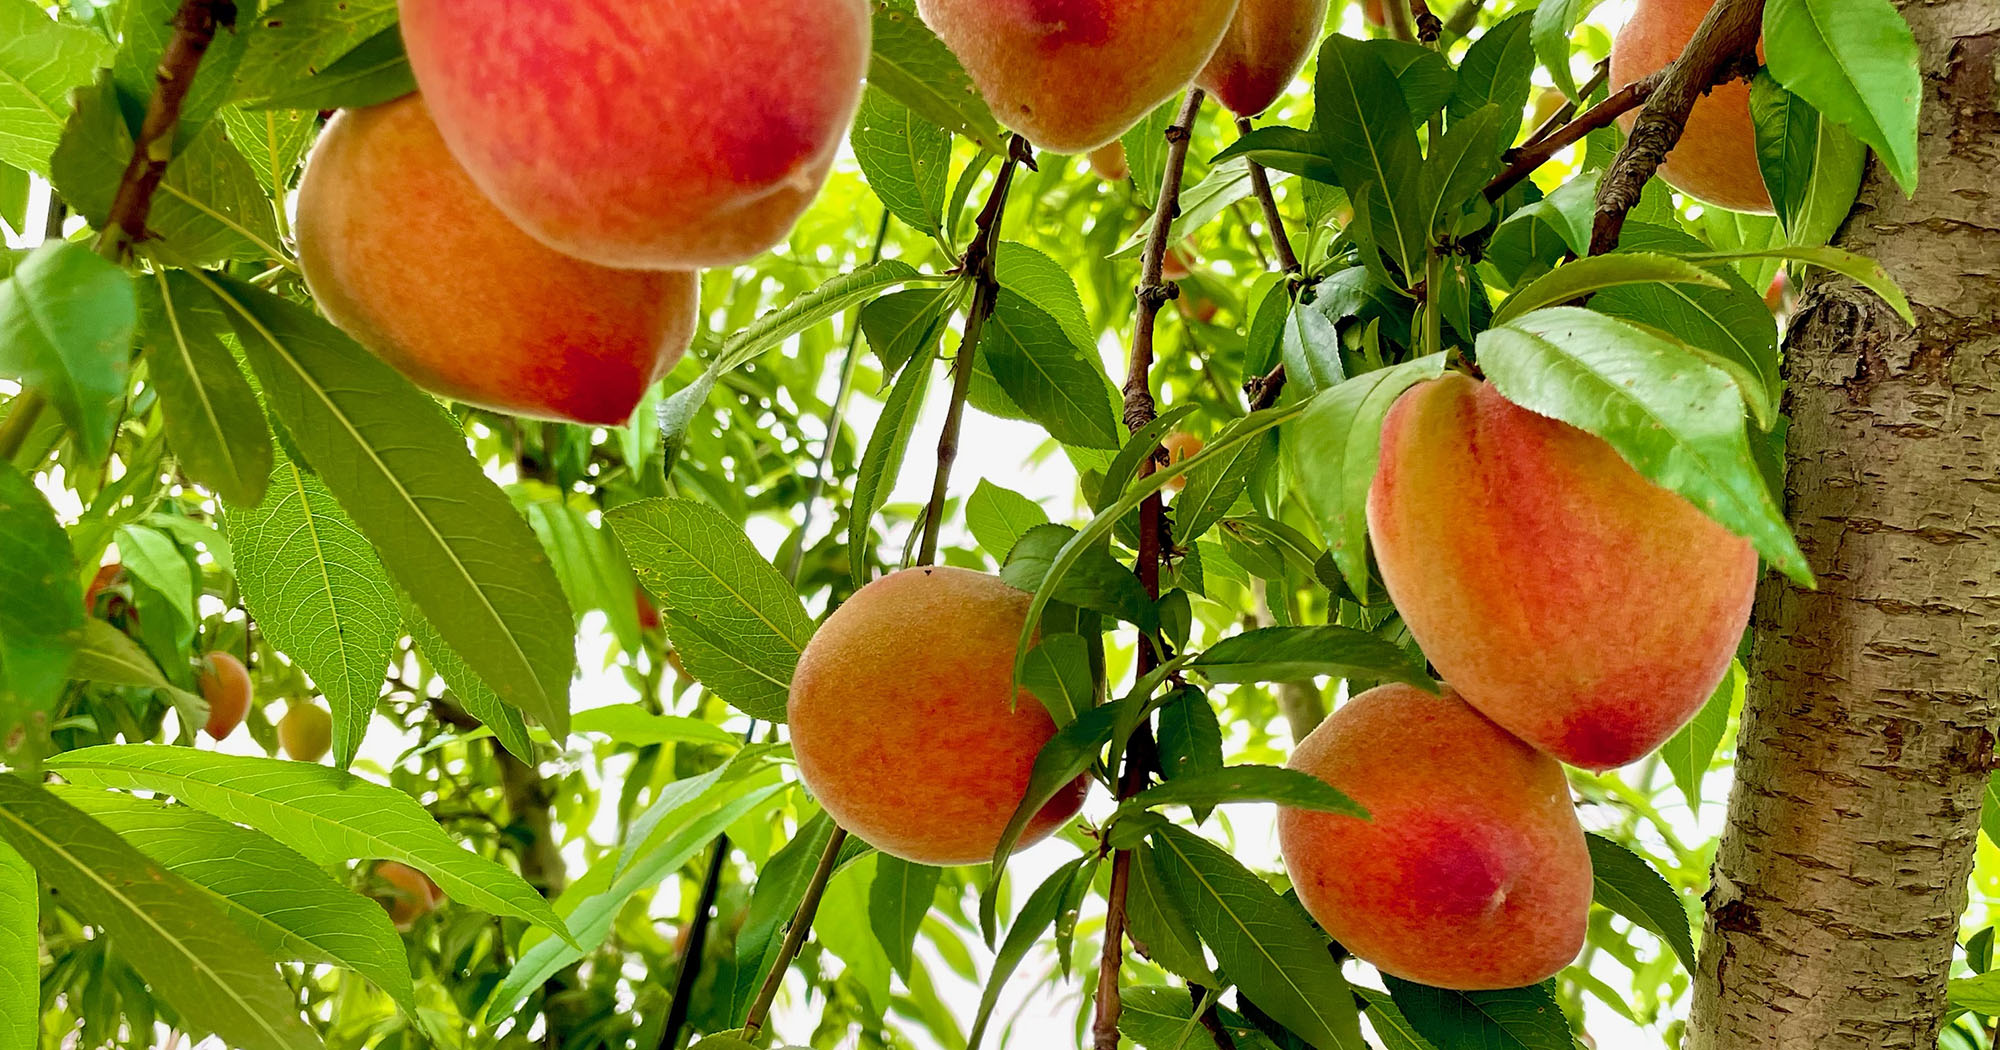 Dozens of bright reddish-orange peaches grow from a green vine